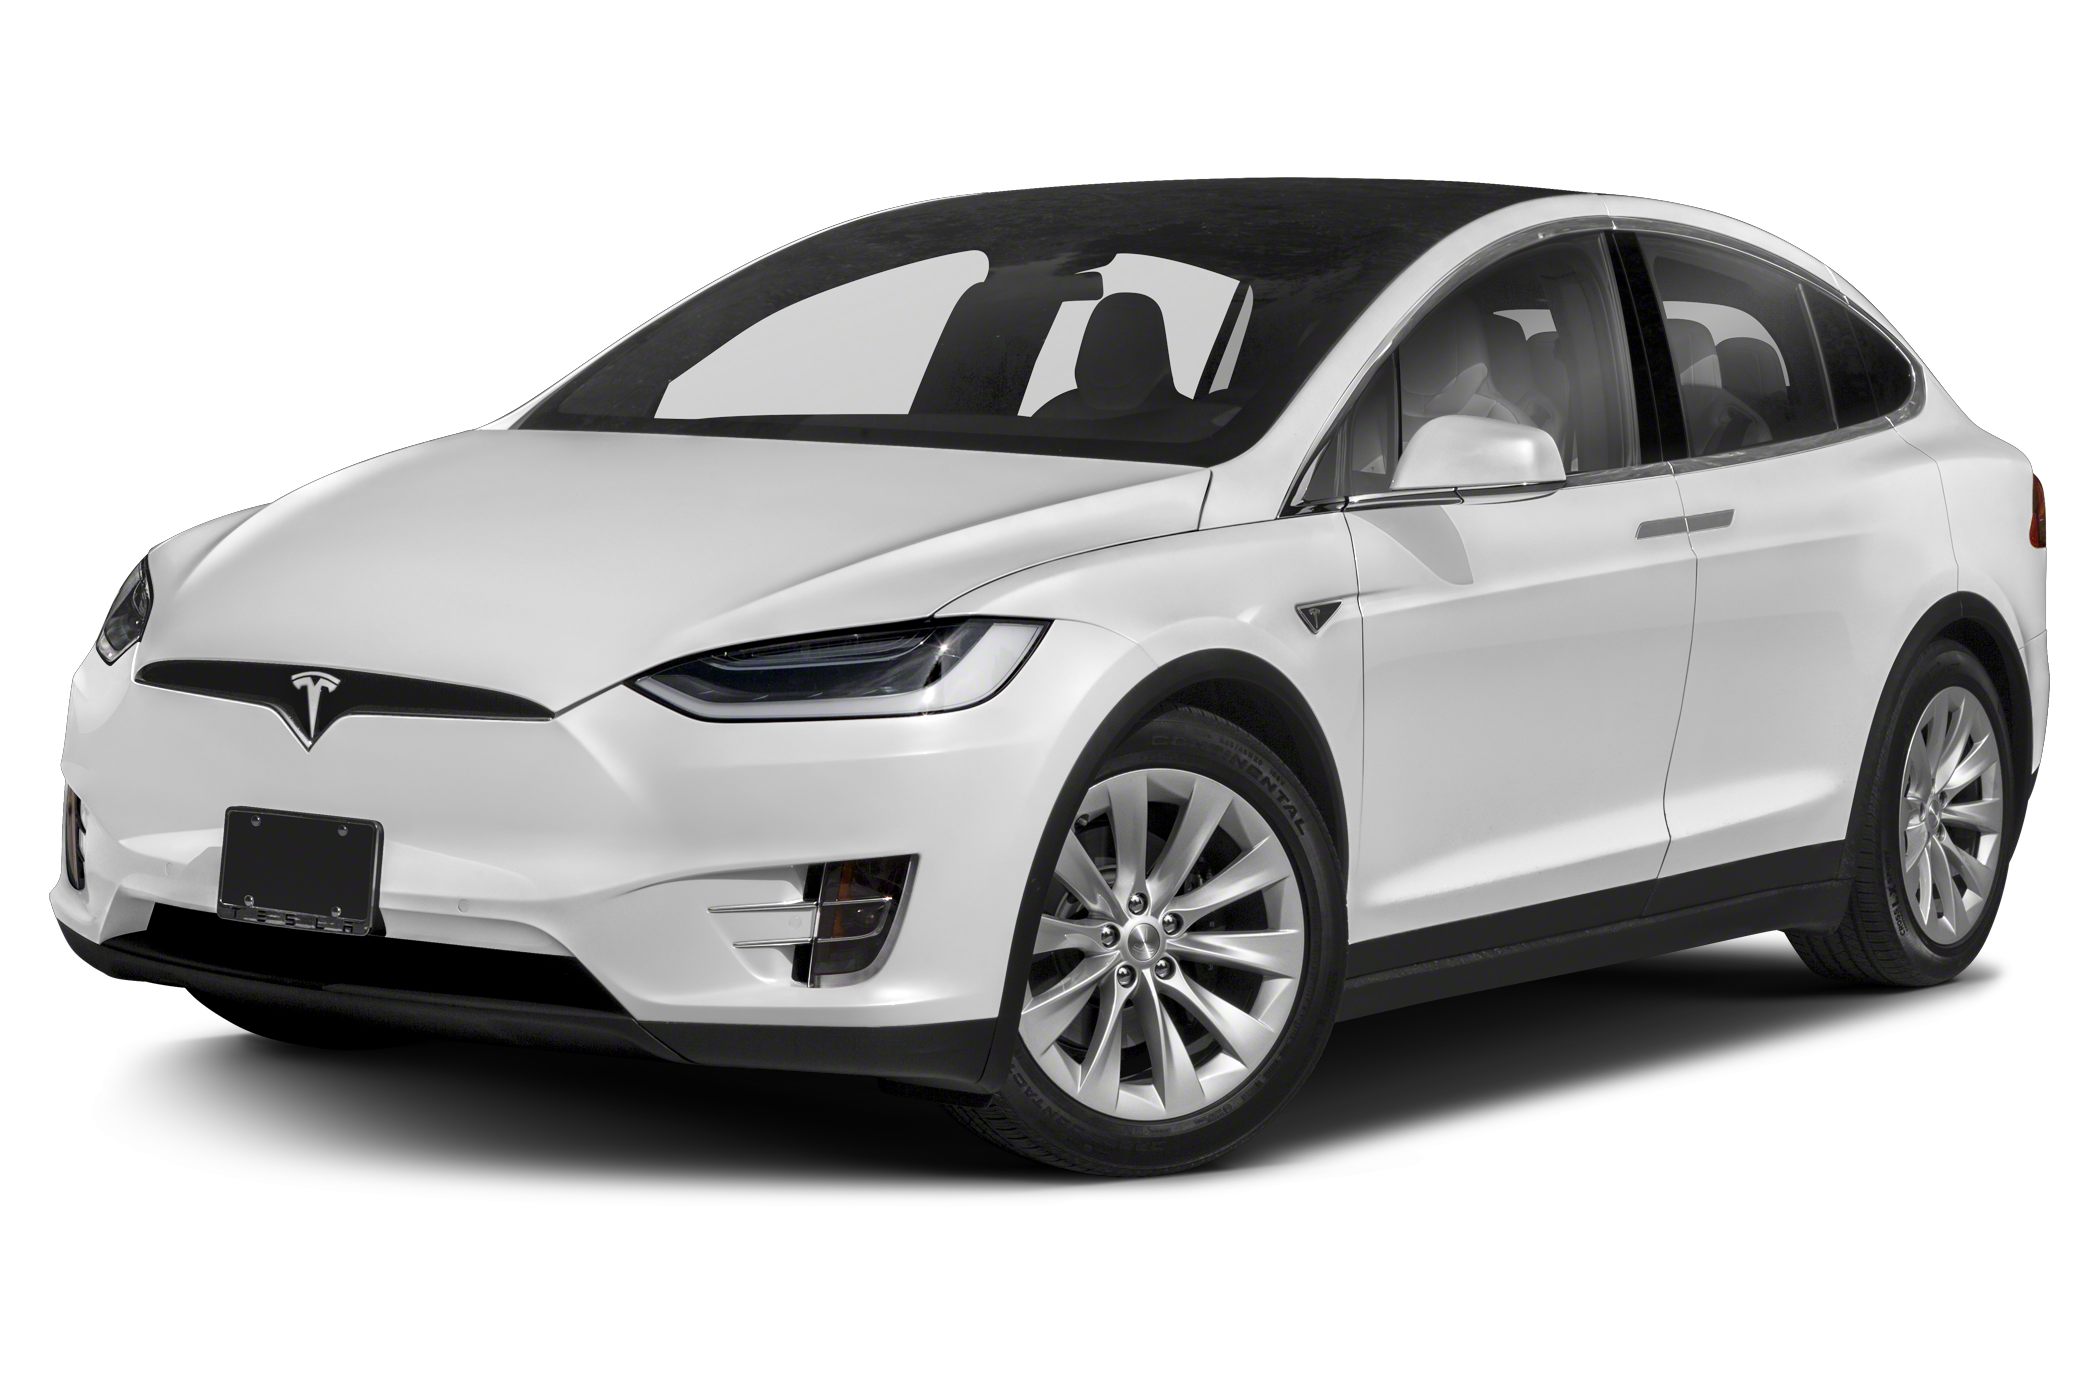 Zeeanemoon heldin overhead 2019 Tesla Model X 75D 4dr Sport Utility Pricing and Options